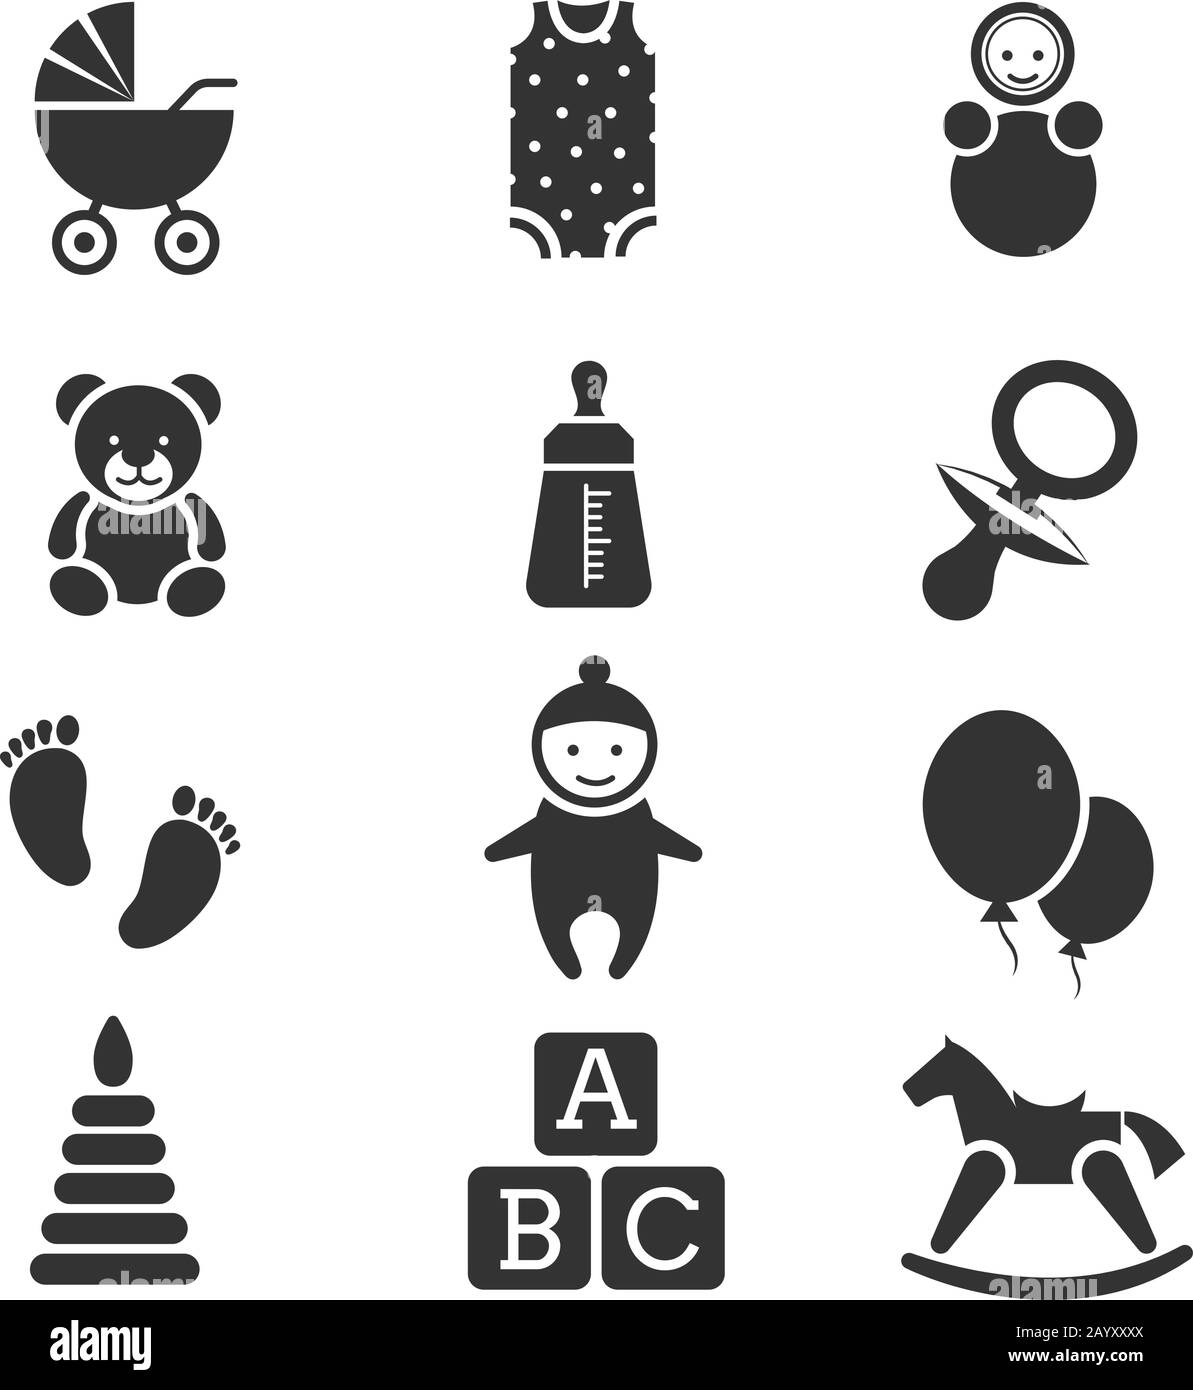 Baby kids vector icons set. Bottle for milk, diaper and teddy bear illustration Stock Vector